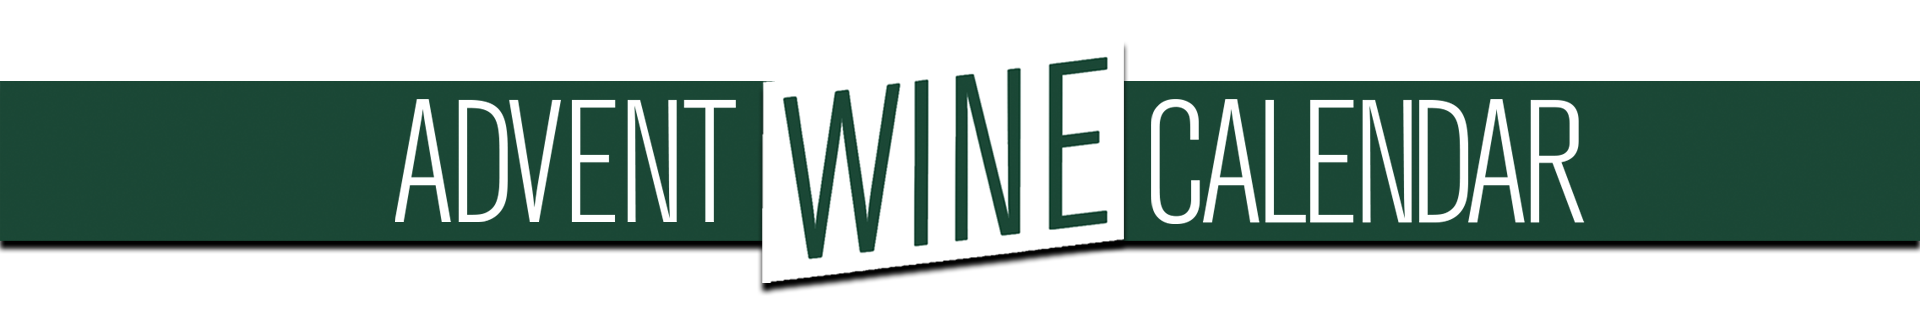 advent-wine-calendar-header